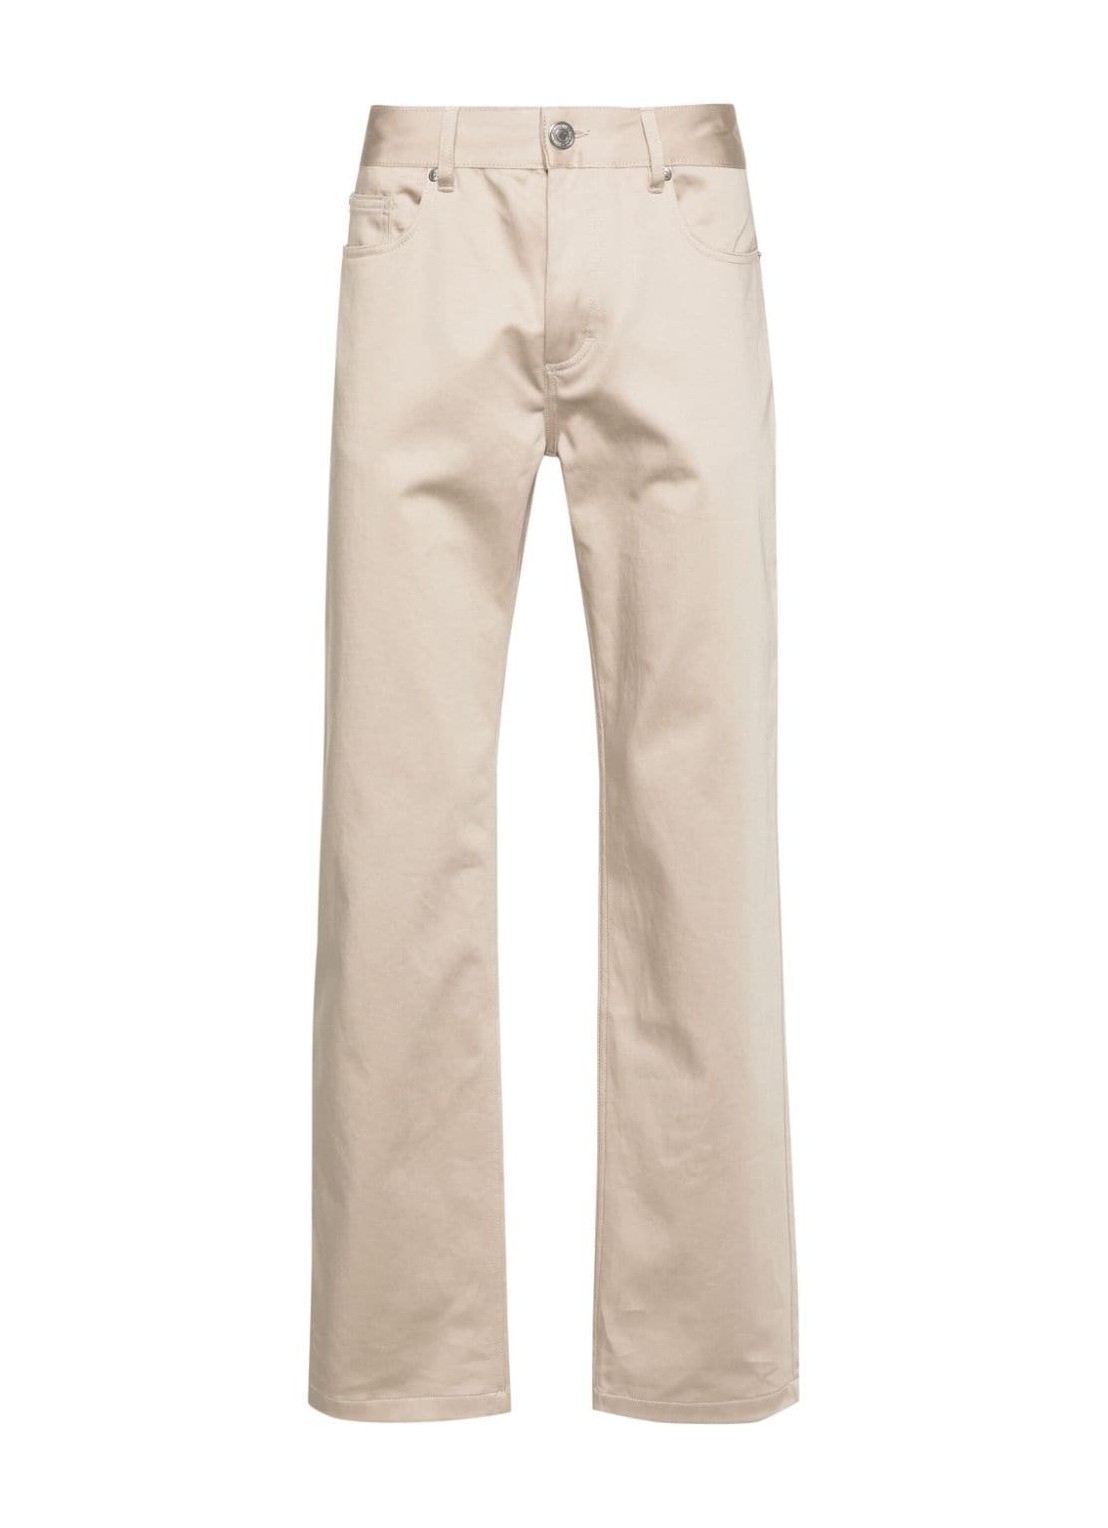 Pantalon ami pant  manstraight fit trousers - htr500co0009 271 talla beige
 